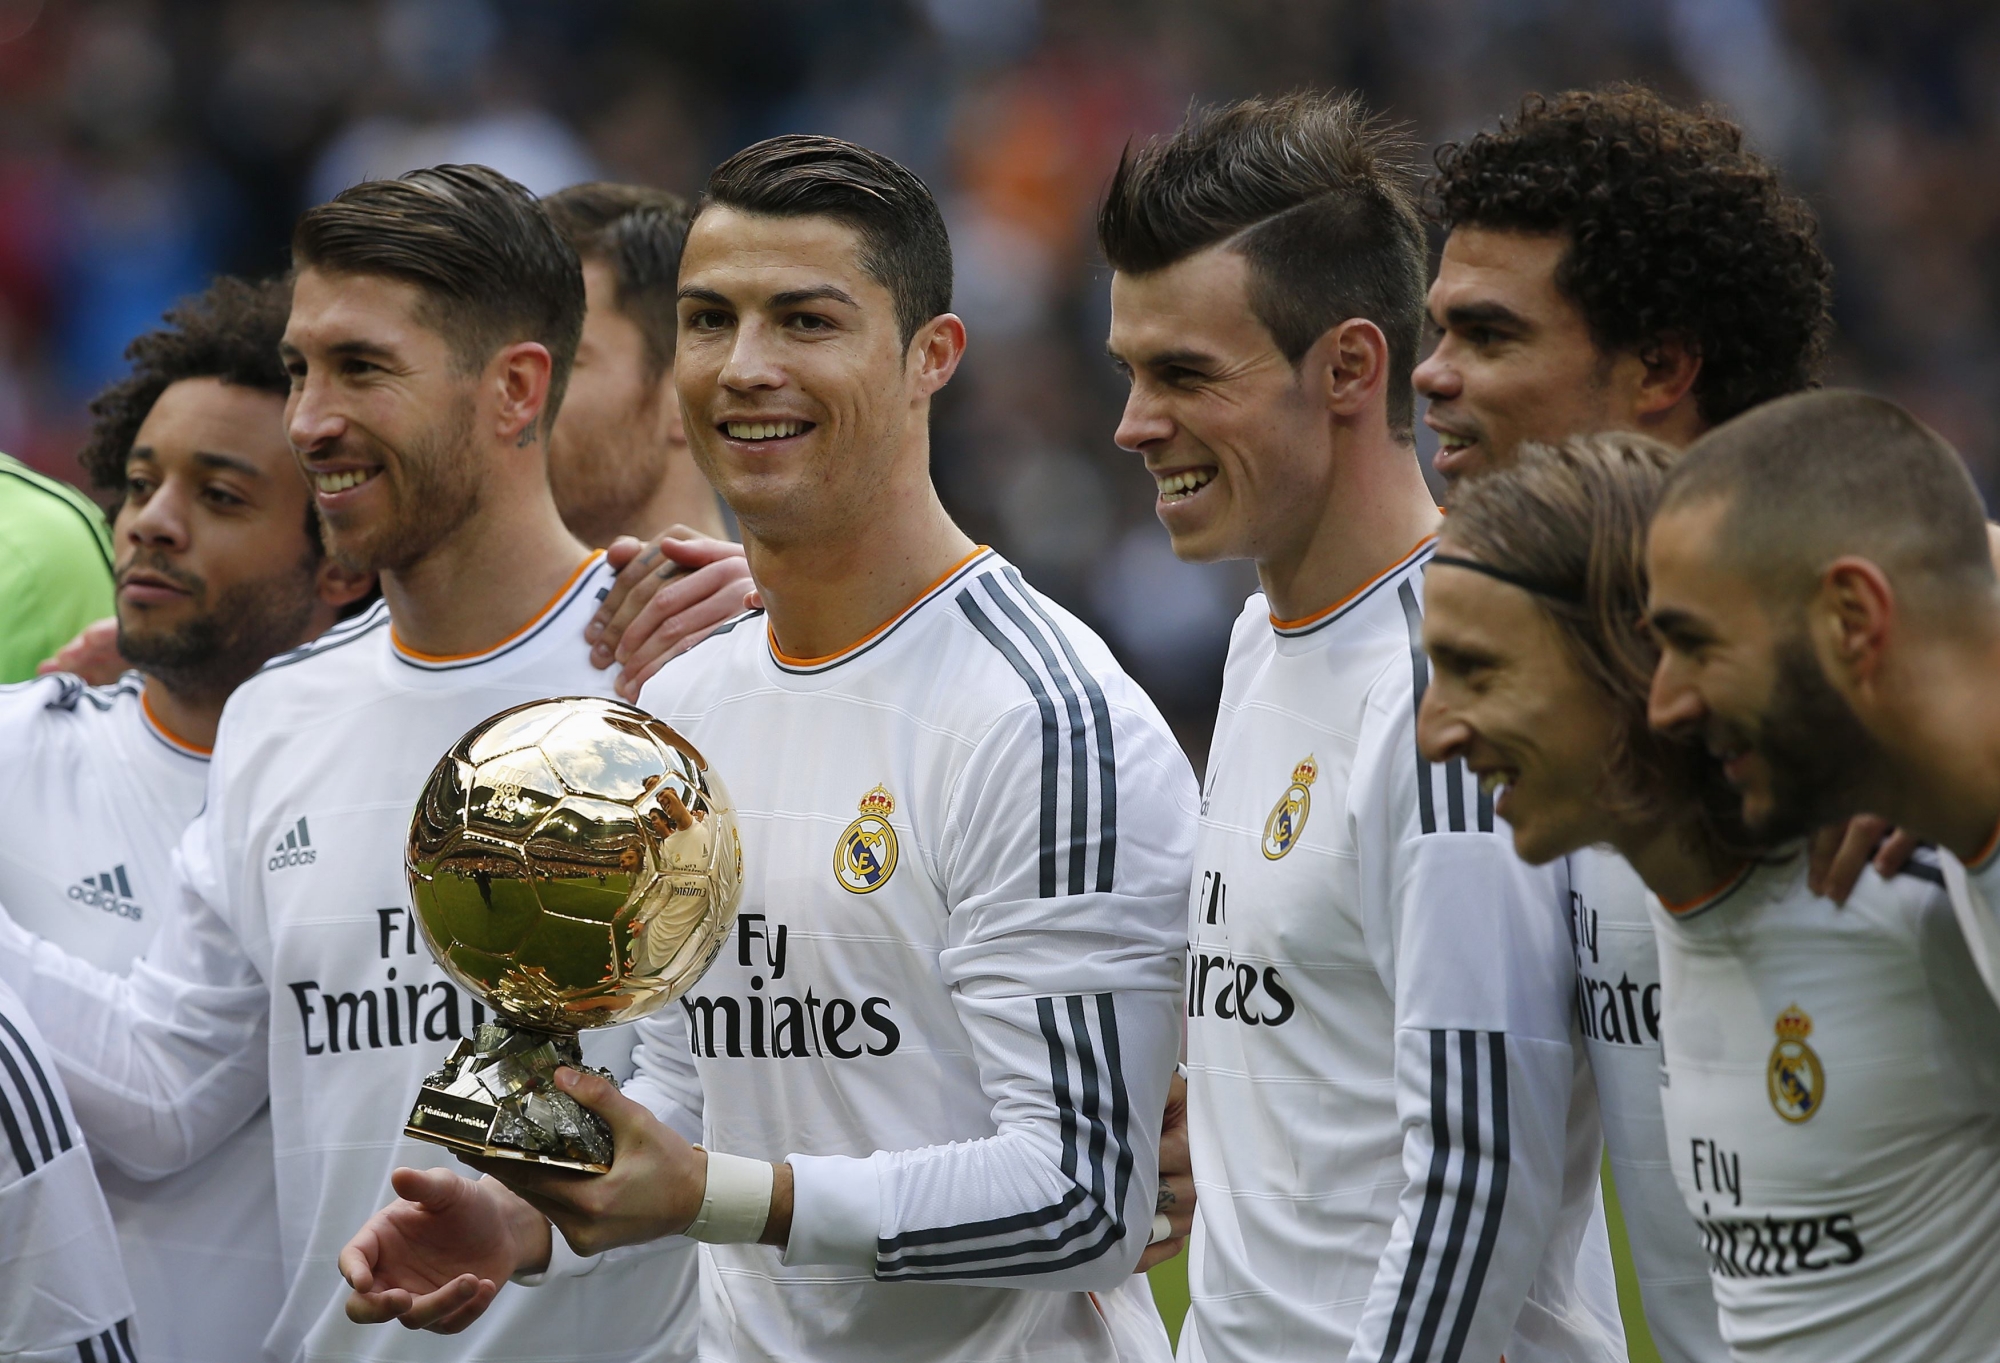 Real madrid world. Cristiano Ronaldo real Madrid 2014. Реал Мадрид Роналдо с командой. Реал Мадрид Криштиану команда. Криштиану Роналду real Madrid.